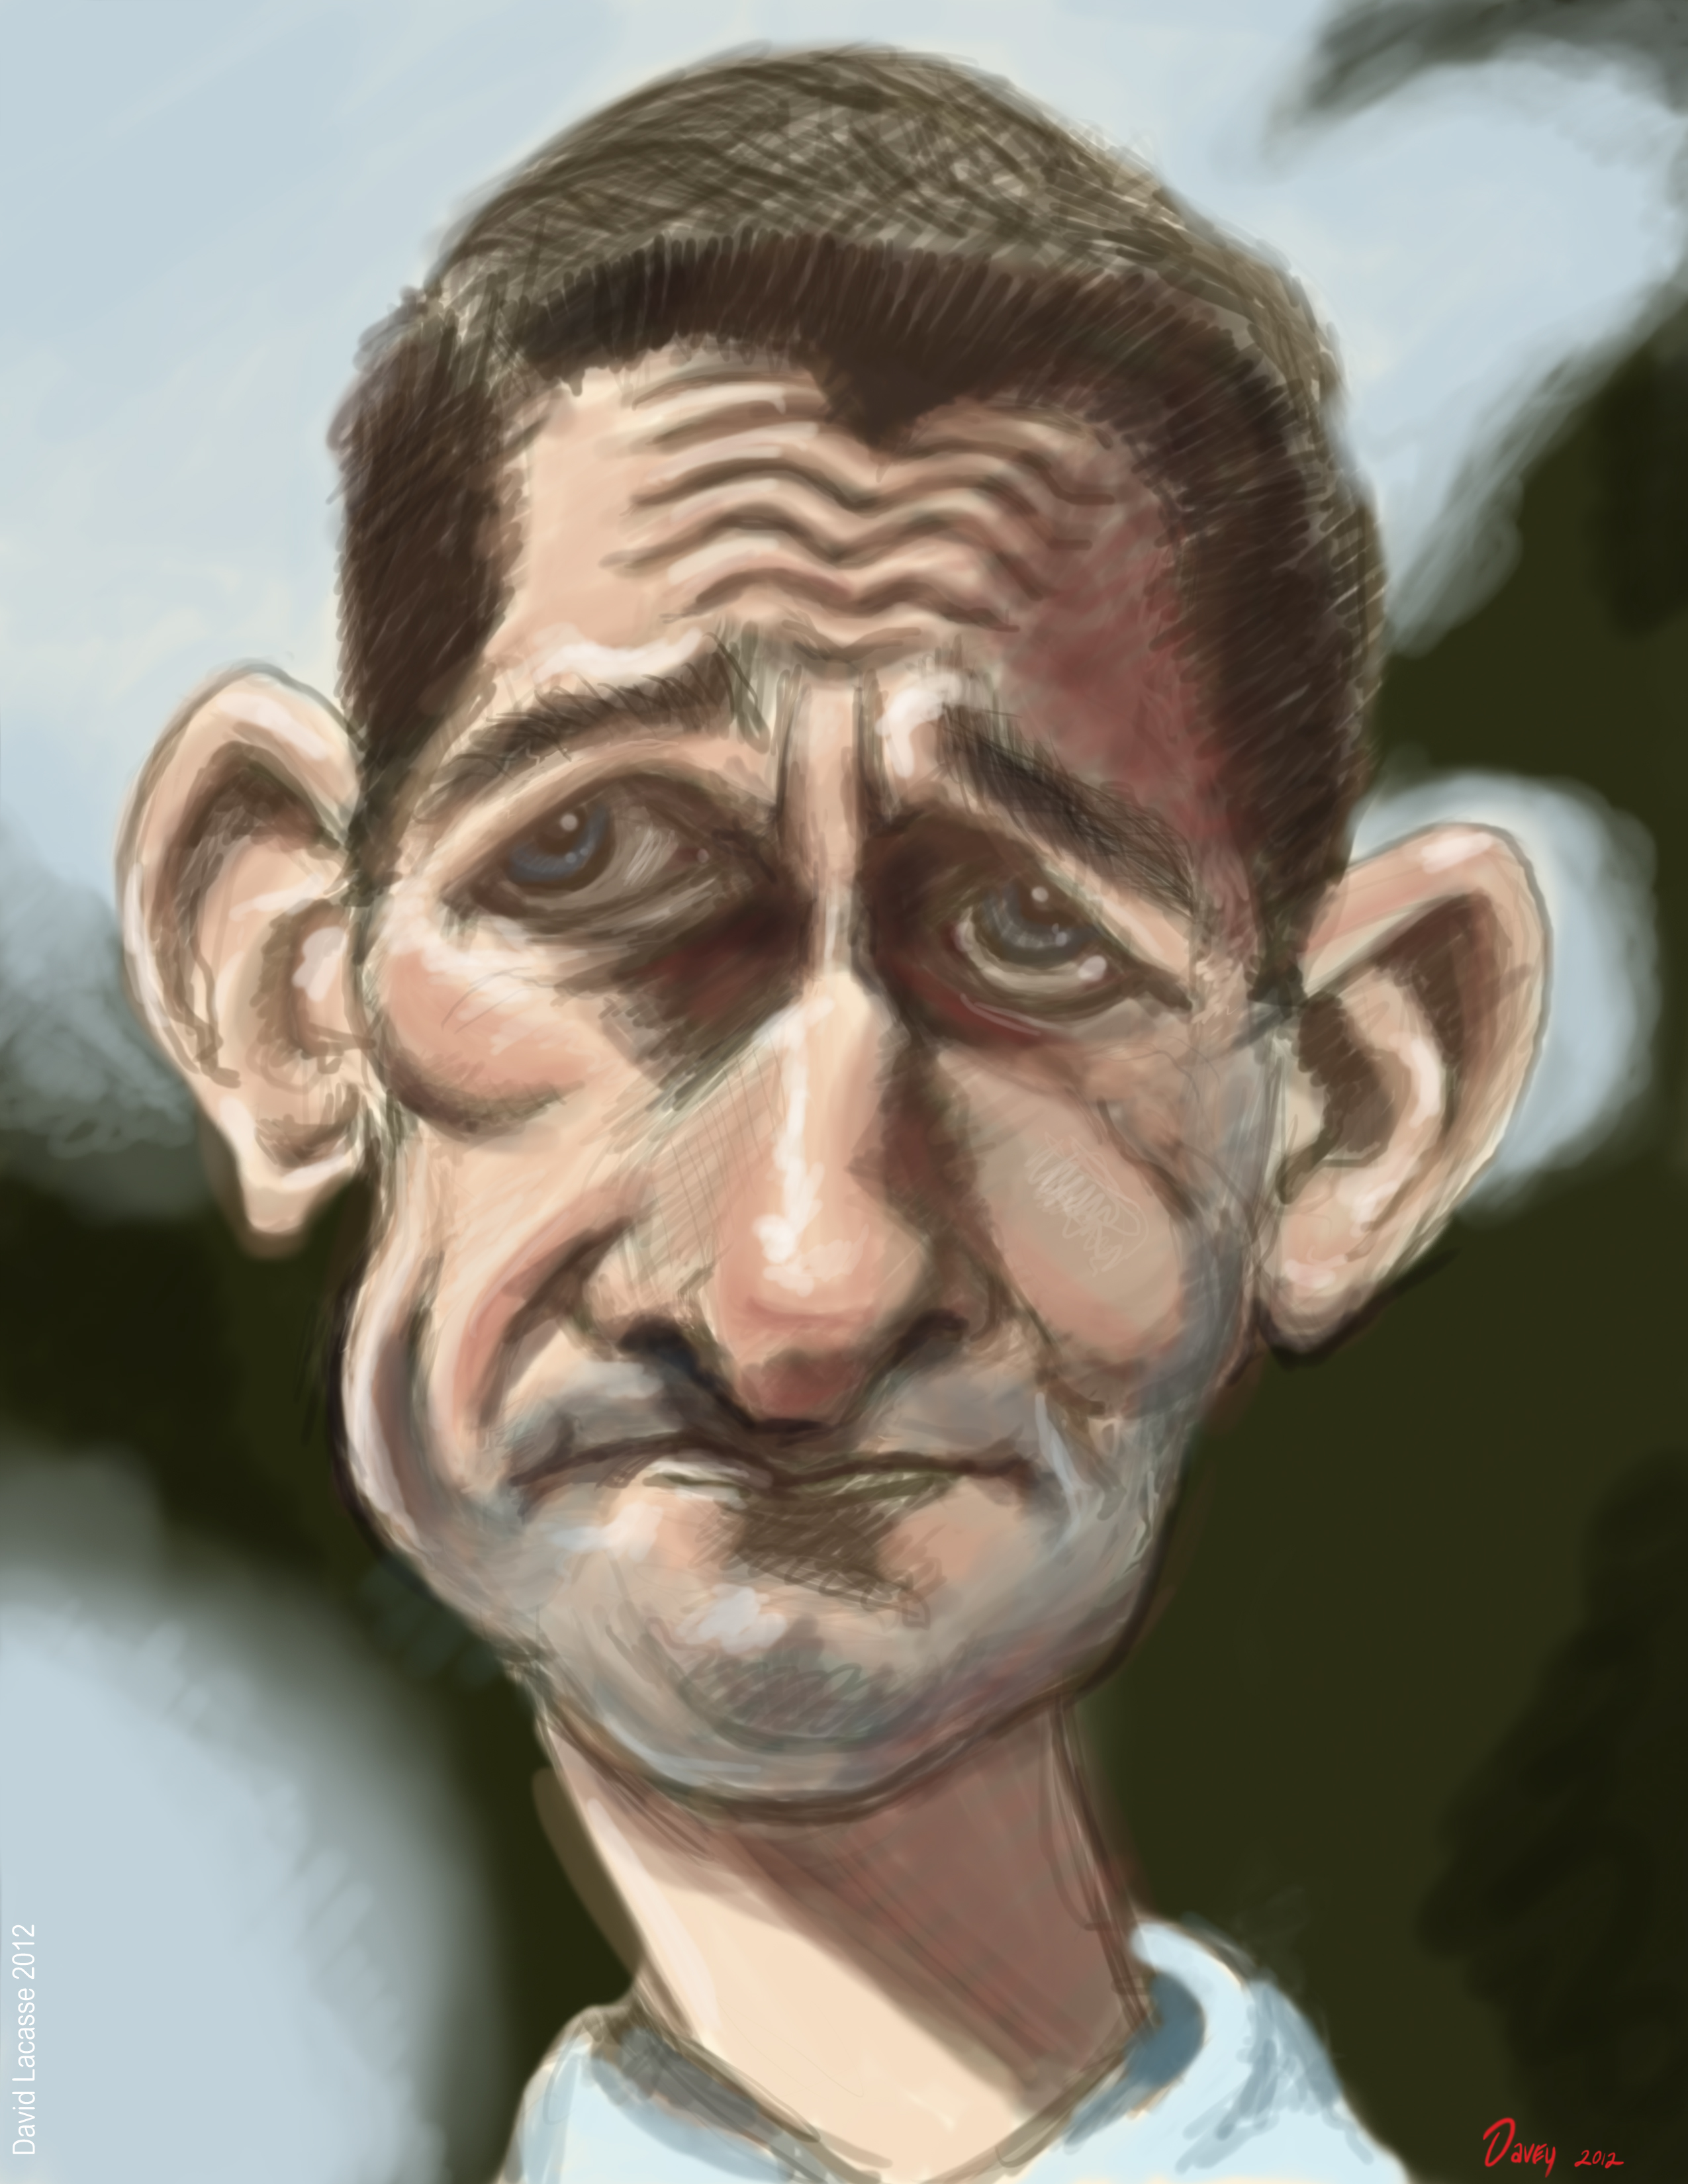 Digital Painting Caricature of Paul Ryan by David Lacasse | via Creative Commons